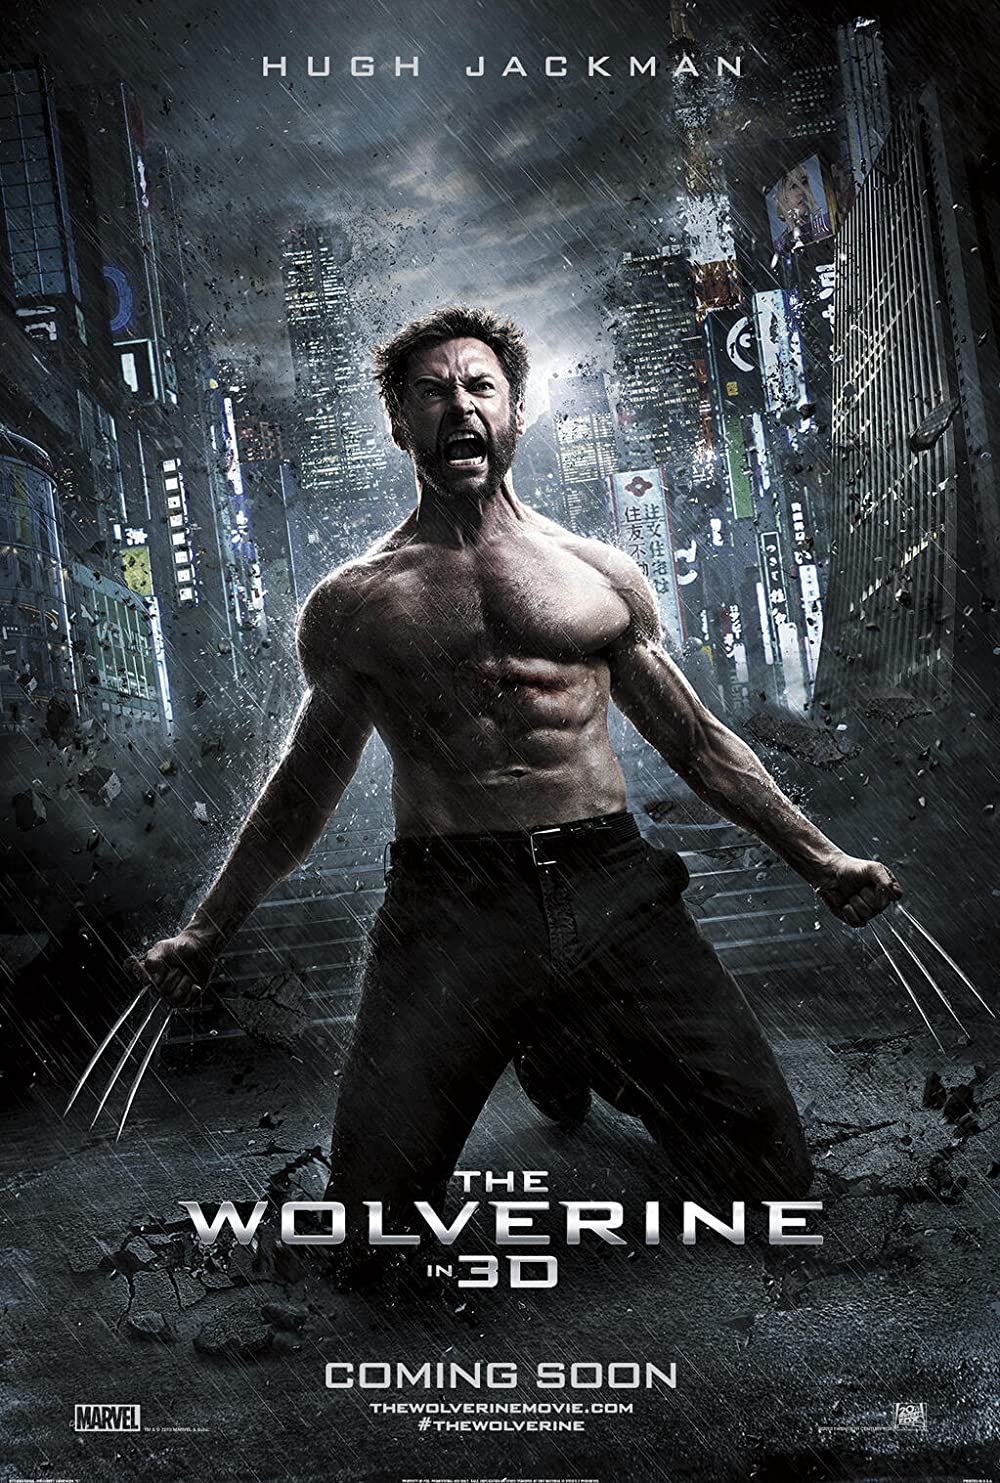 FULL MOVIE: The Wolverine (2013)